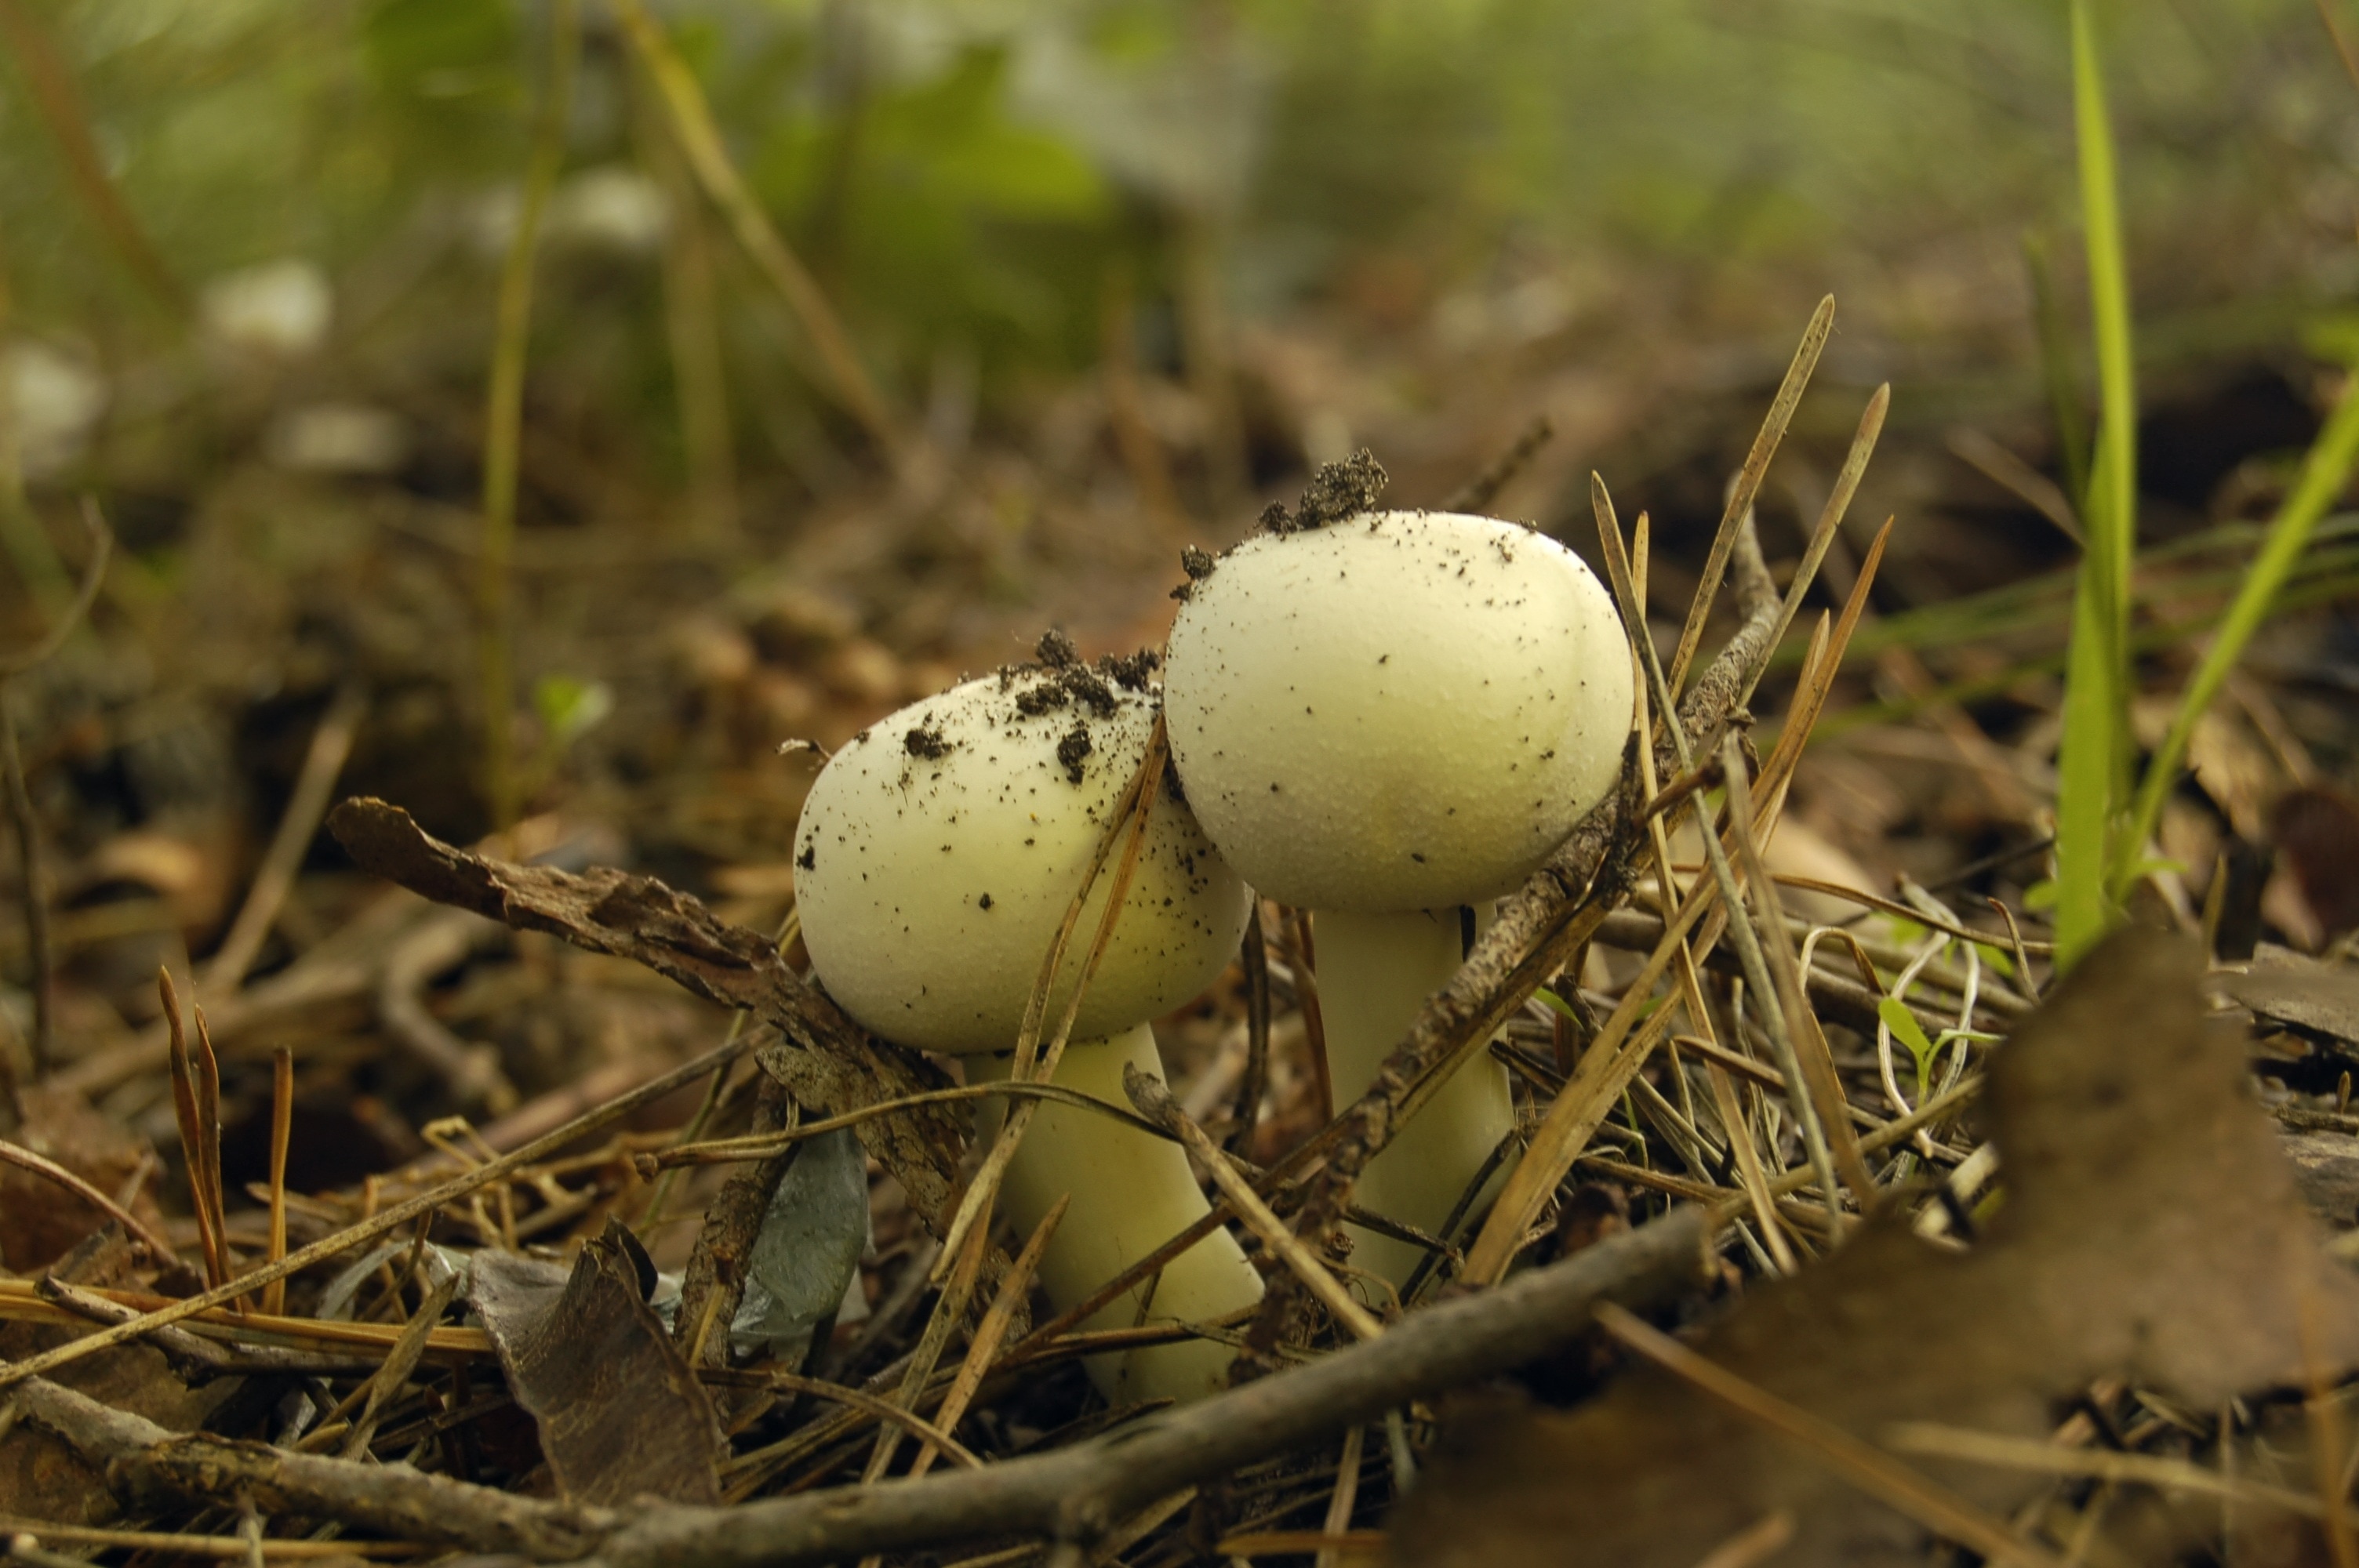 2 white mushroom